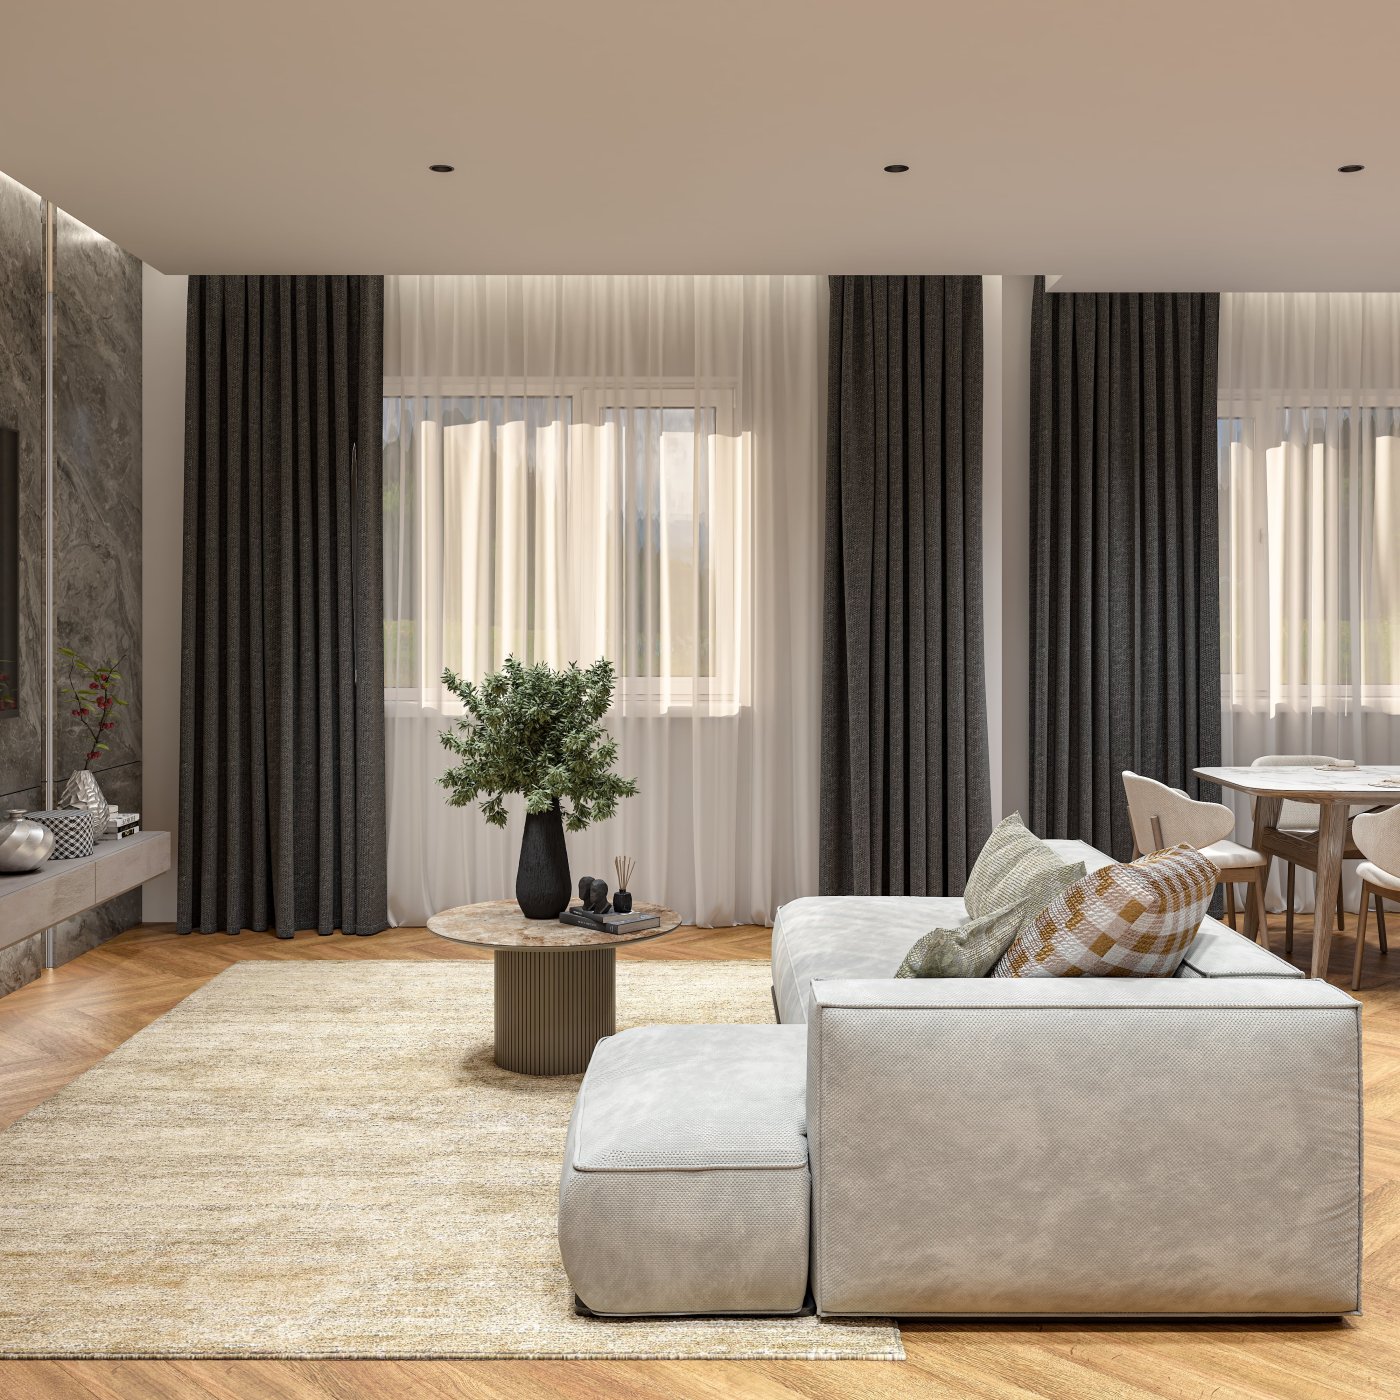 Living room | Kitchen Interior design&visualiation